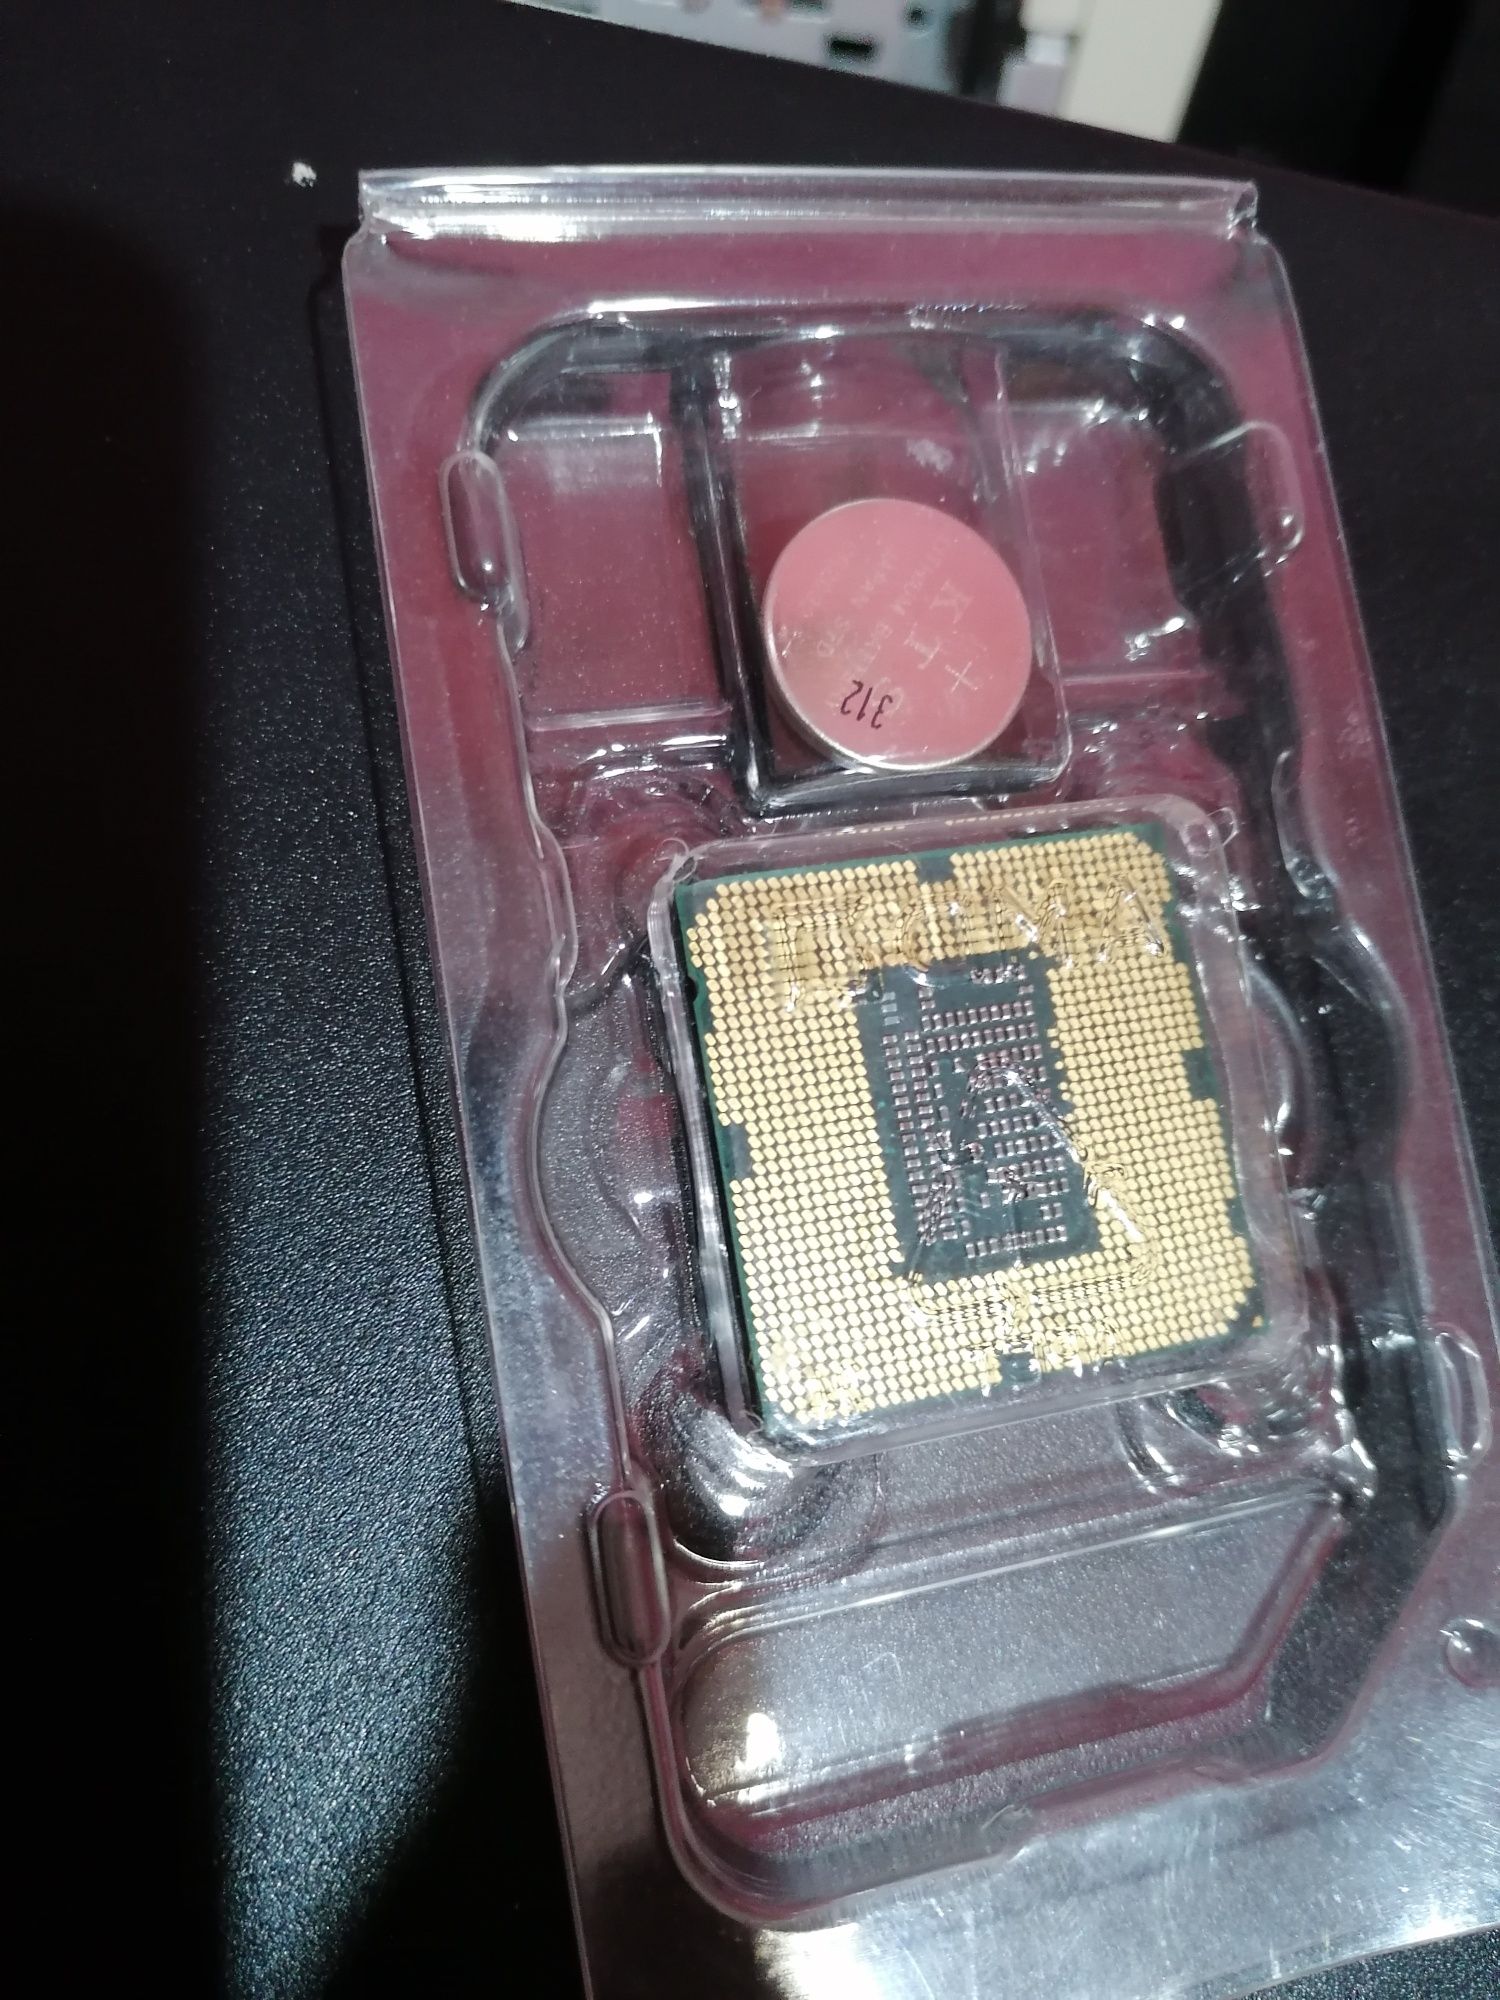 Procesor pc Intel core